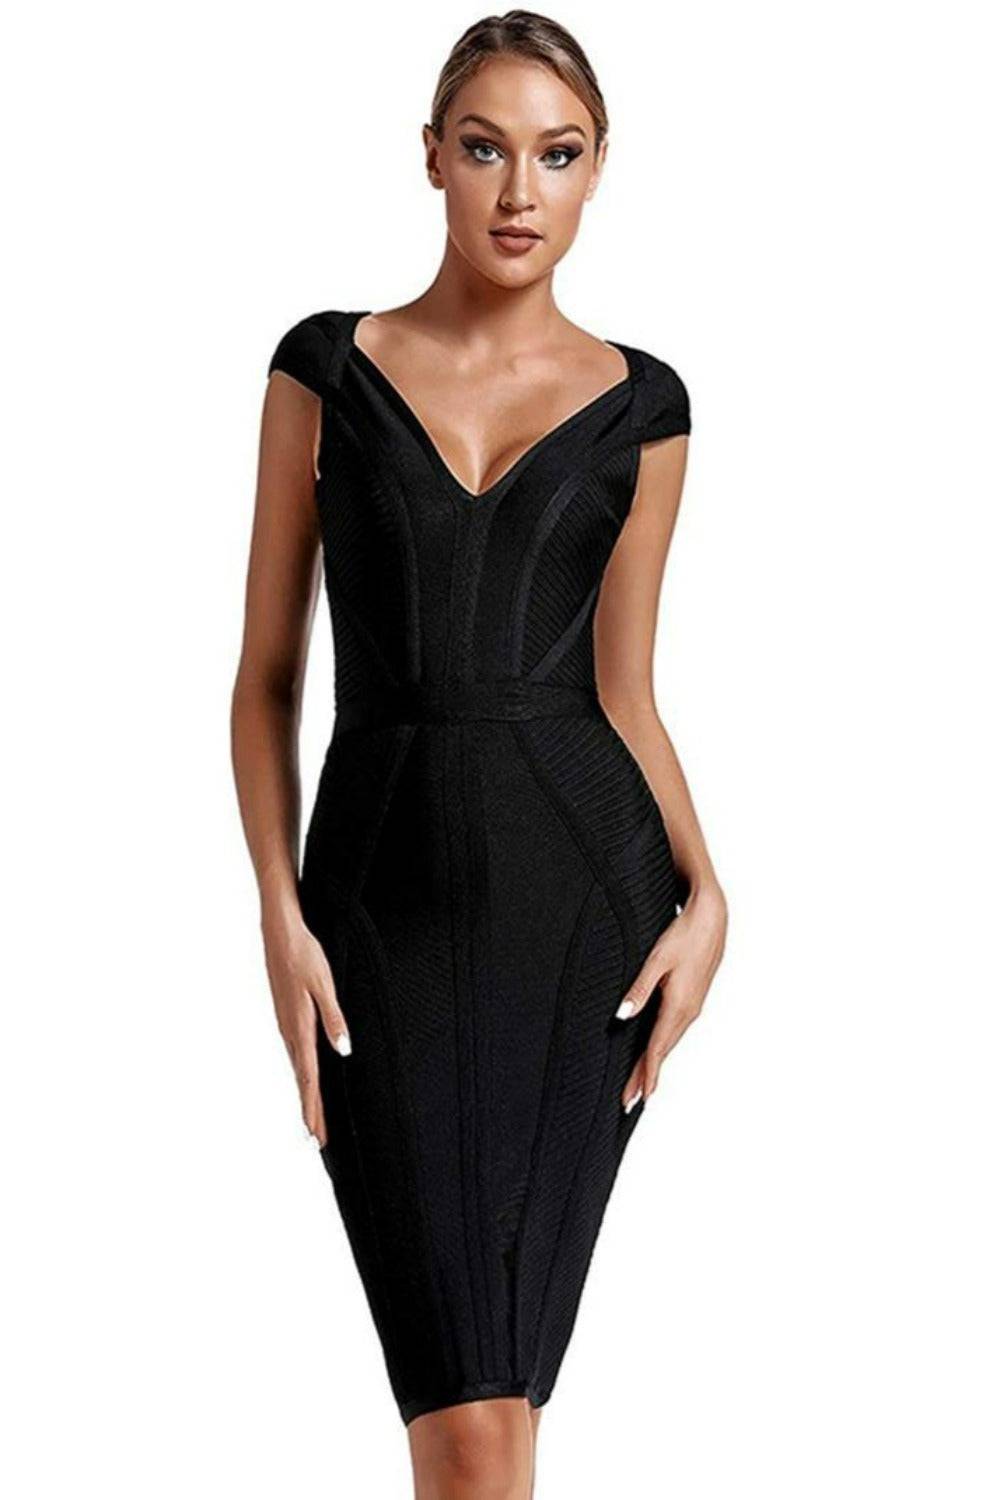 Loren Runway Elegant Short Sleeve Striped Bandage Dress - Black - TGC Boutique - Black Bodycon Dress